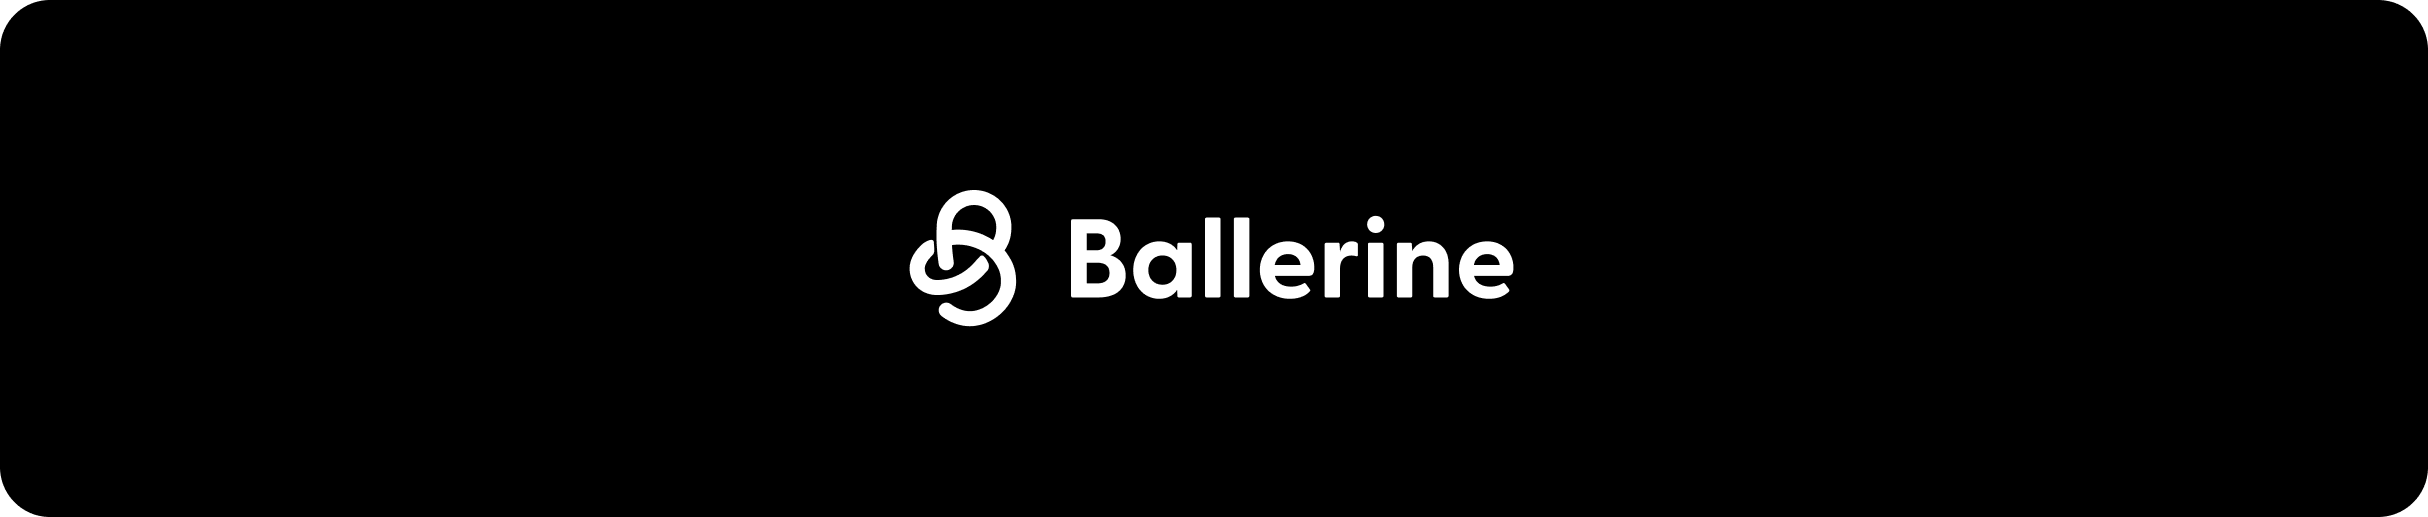 ballerine